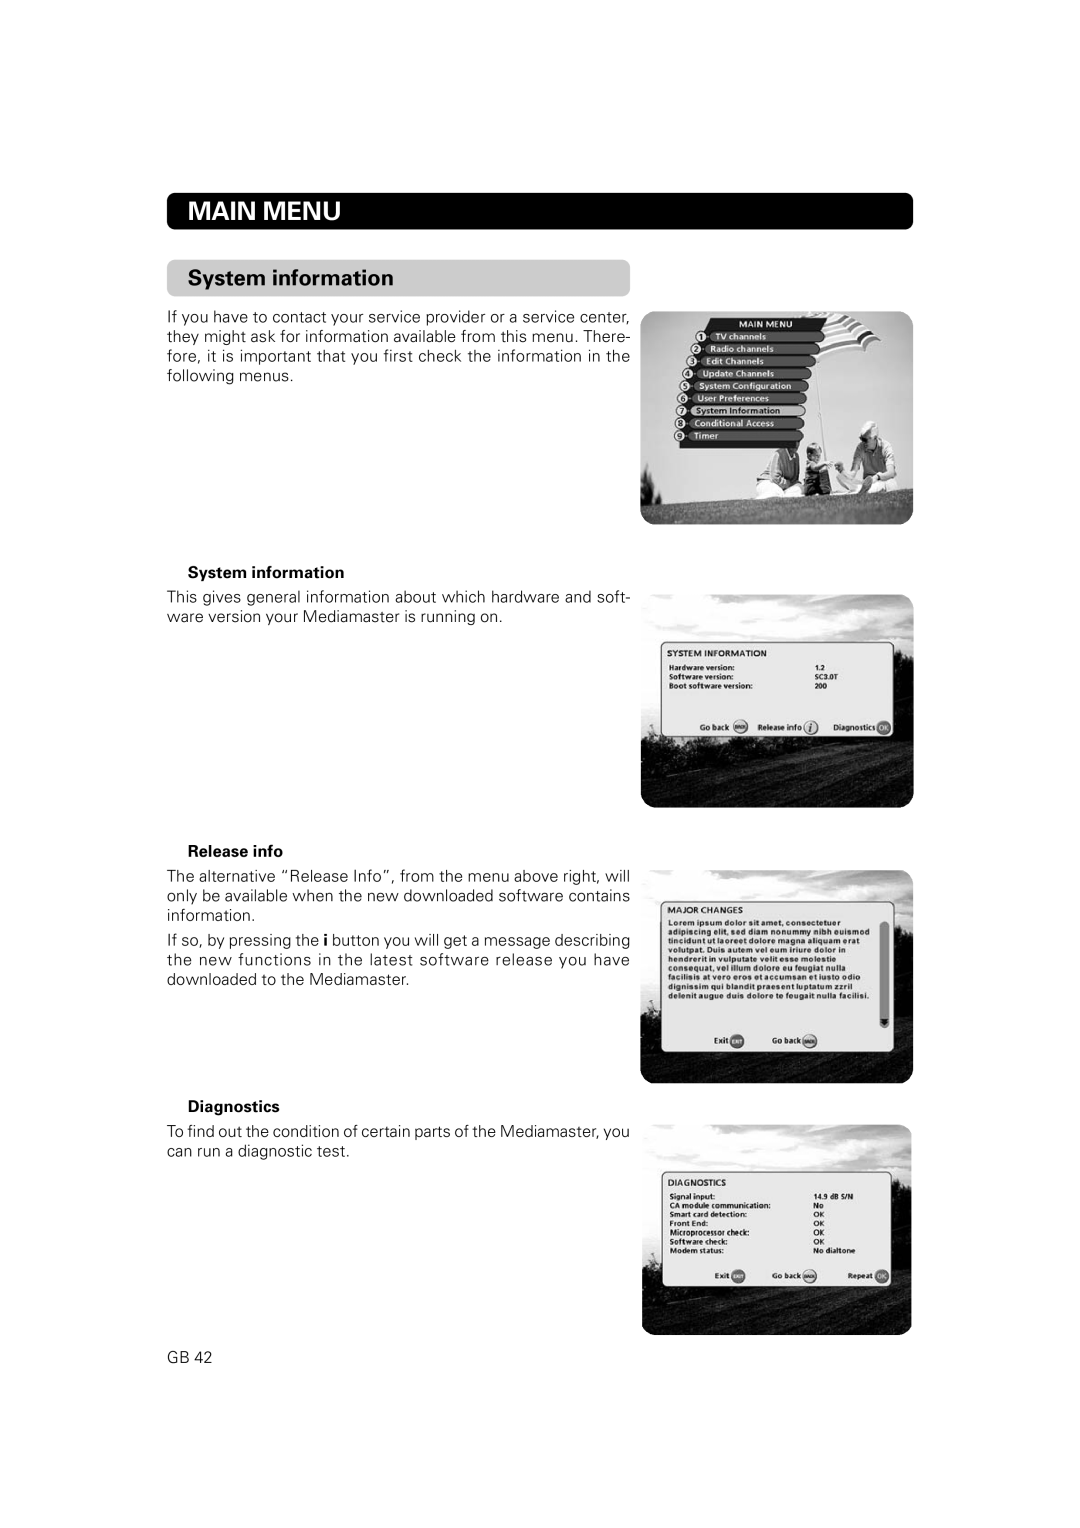 Nokia 9802 S owner manual System information, Main Menu, Release info, Diagnostics 